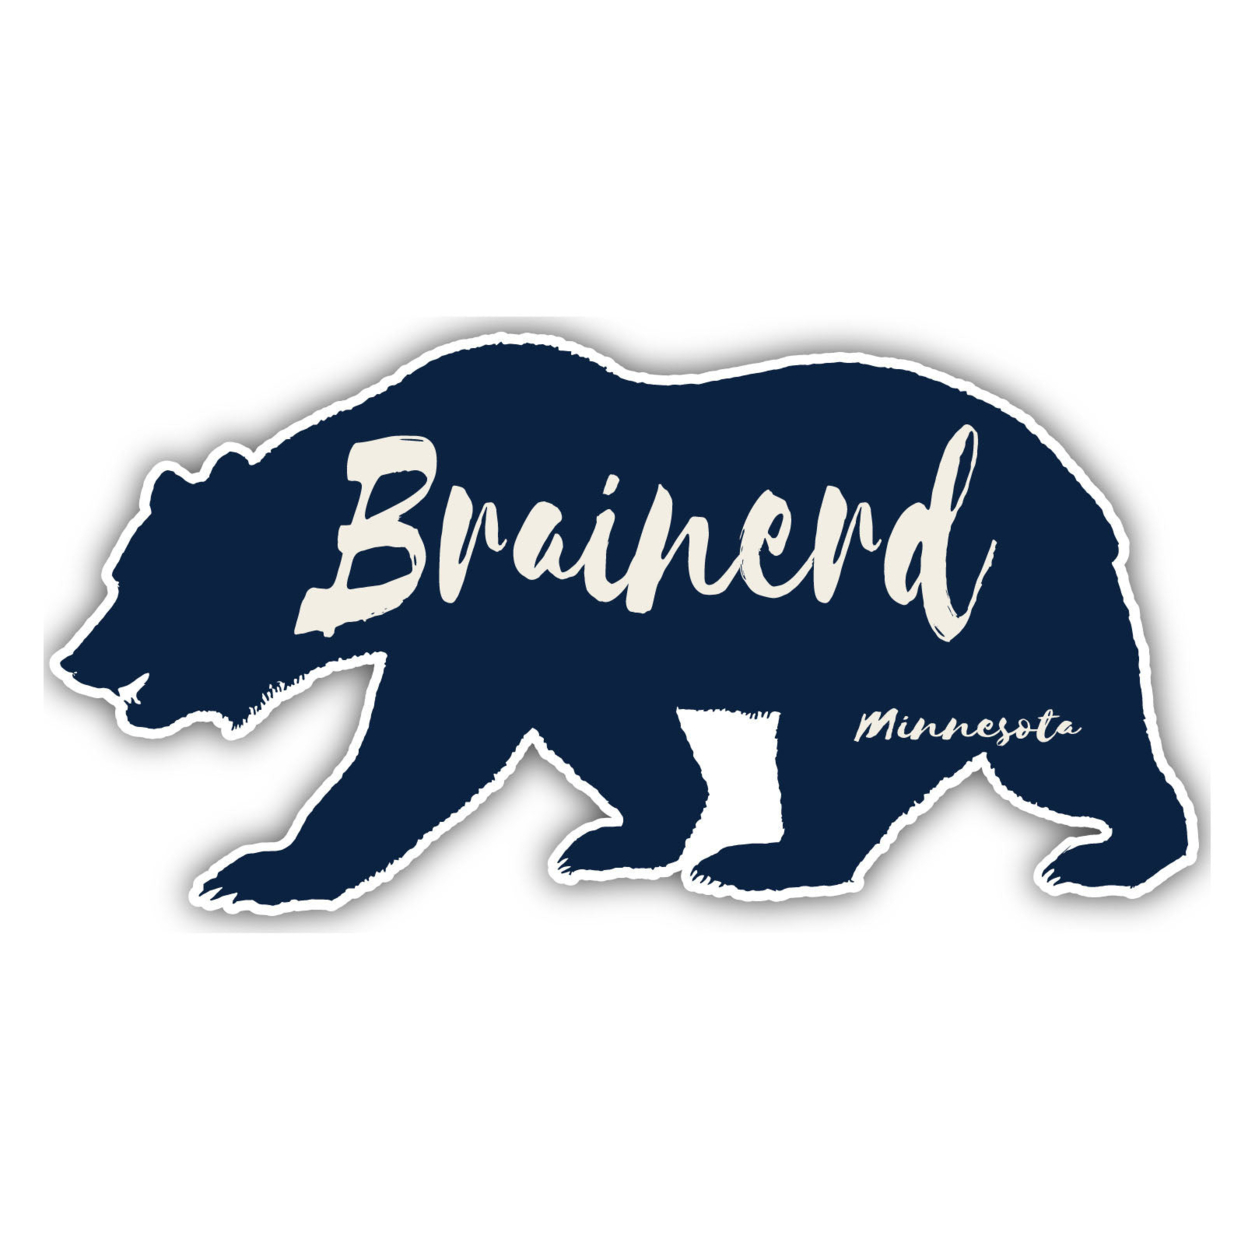 Brainerd Minnesota Souvenir Decorative Stickers (Choose Theme And Size) - 4-Pack, 2-Inch, Camp Life